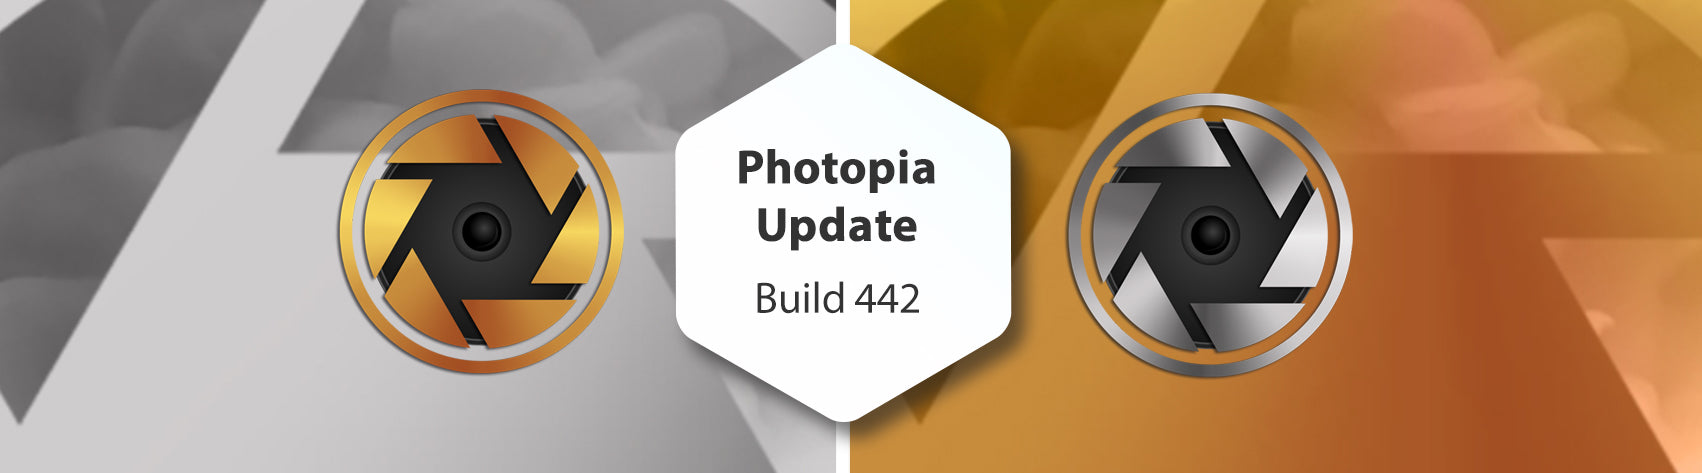 Photopia Update - Build 442